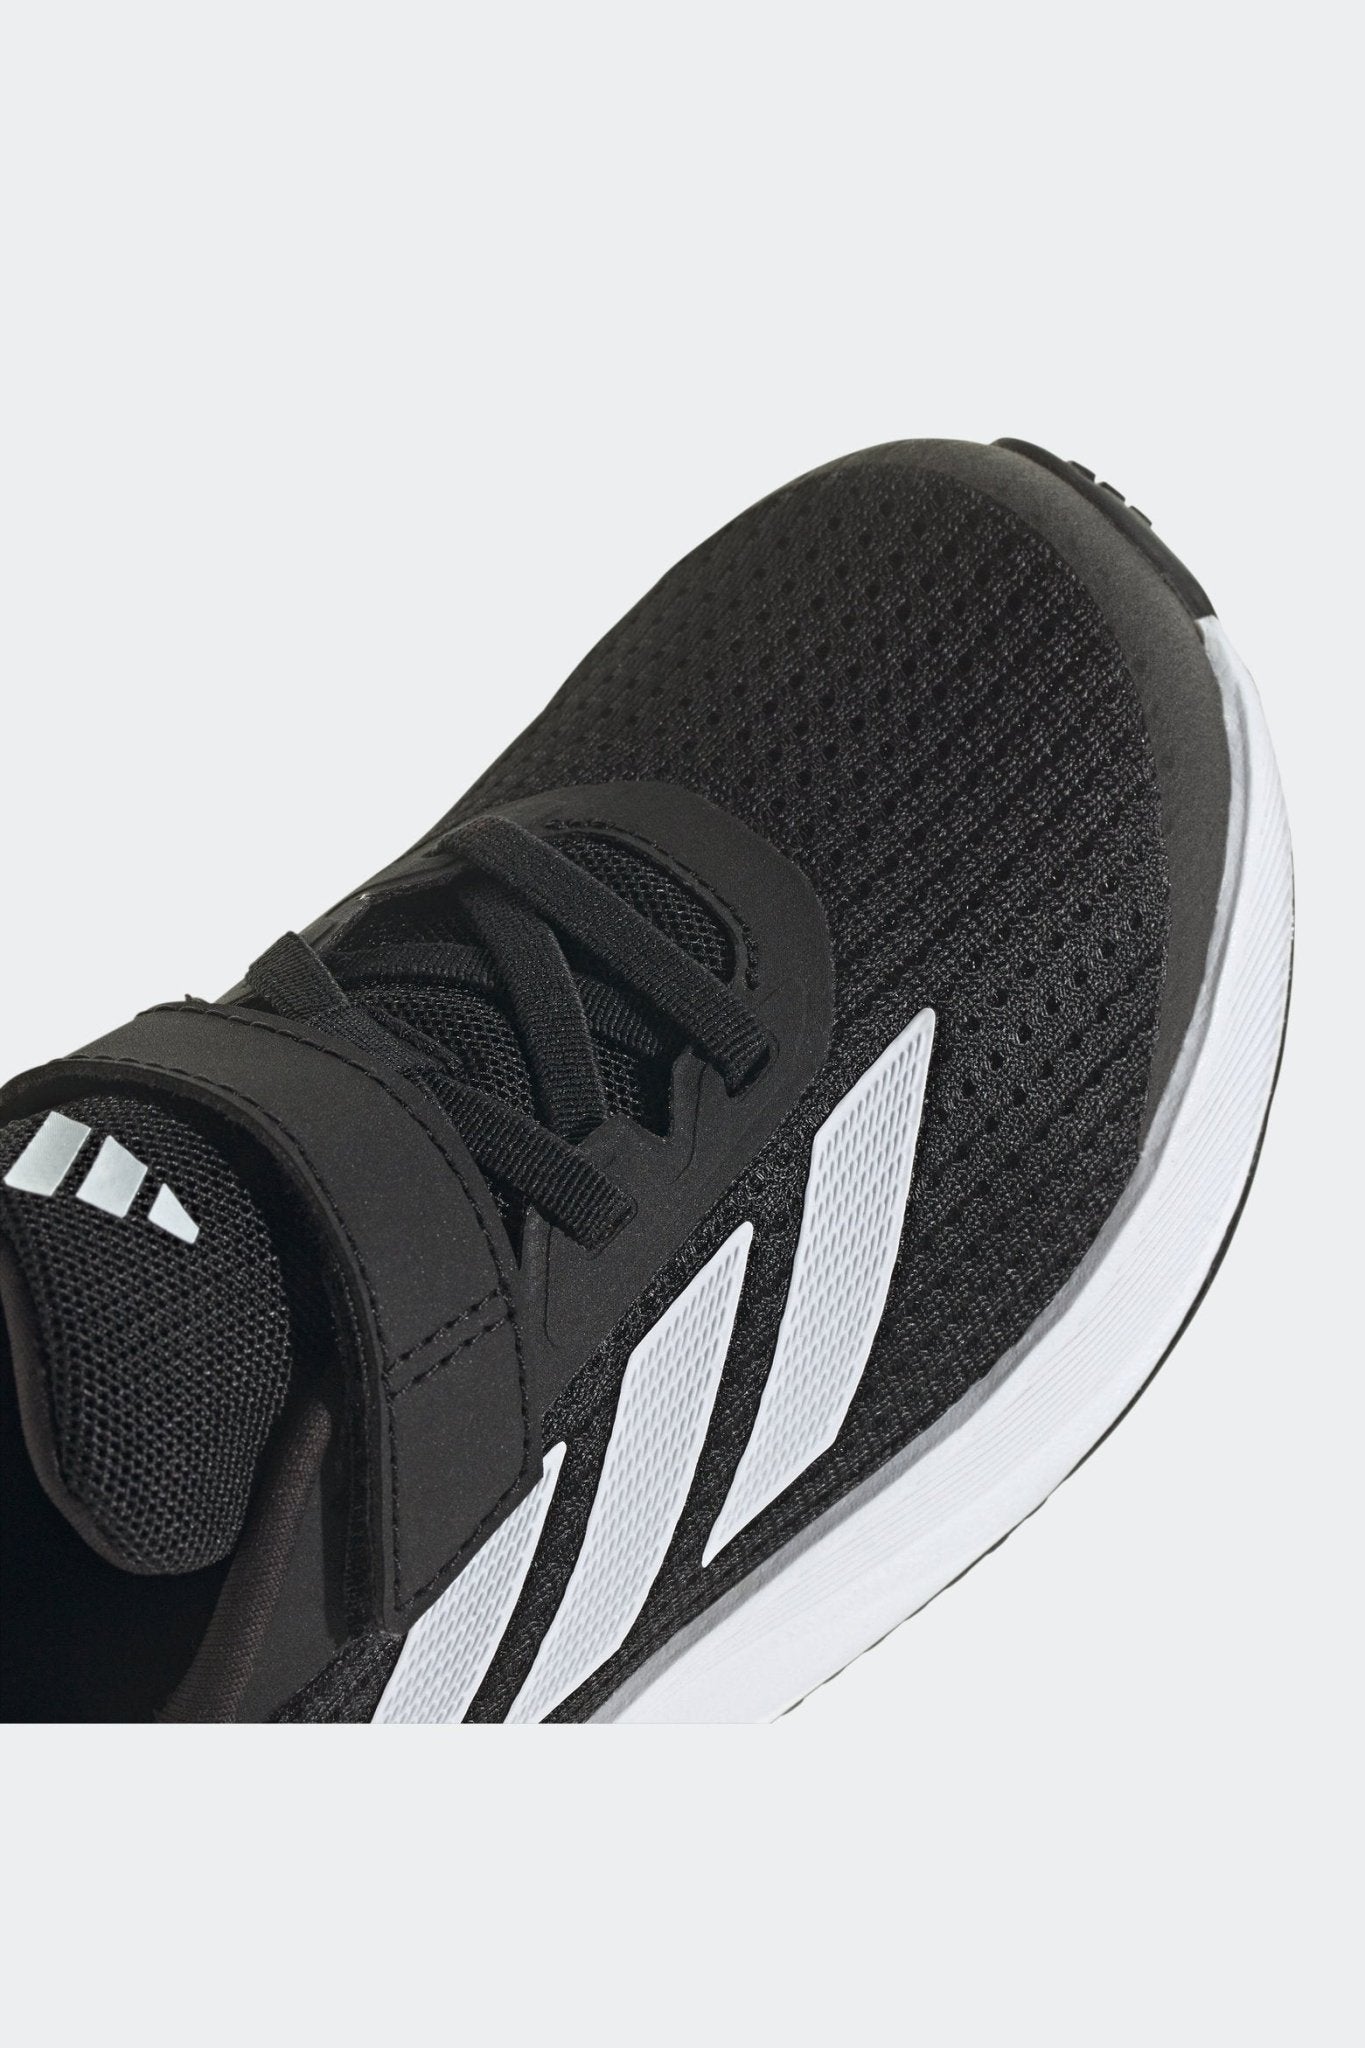 ADIDAS - נעלי ספורט לילדים DURAMO SL בצבע שחור - MASHBIR//365